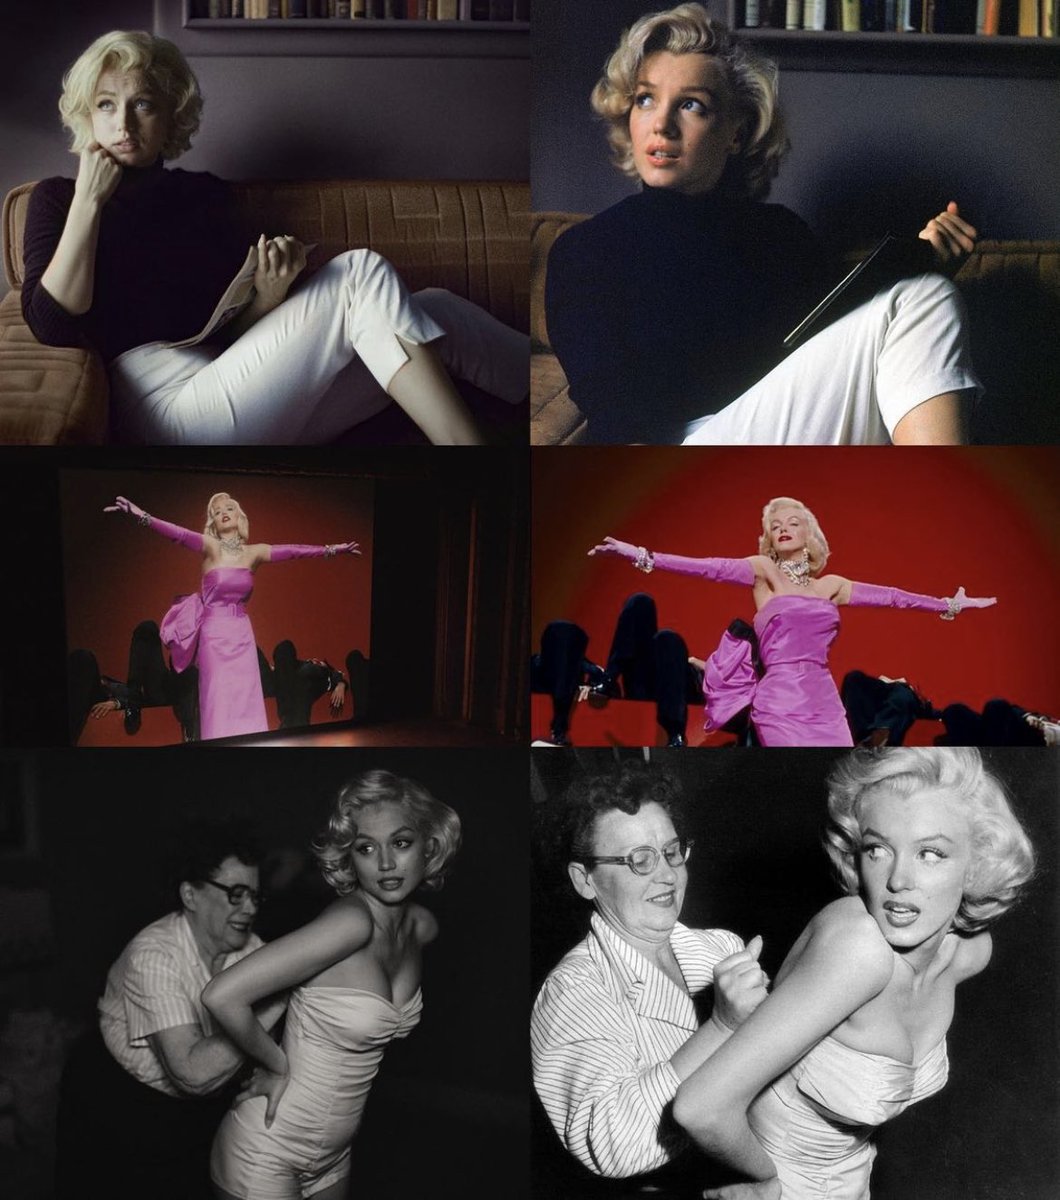 Ana de Armas                Marilyn Monroe         
in BLONDE                      in the 1950’s